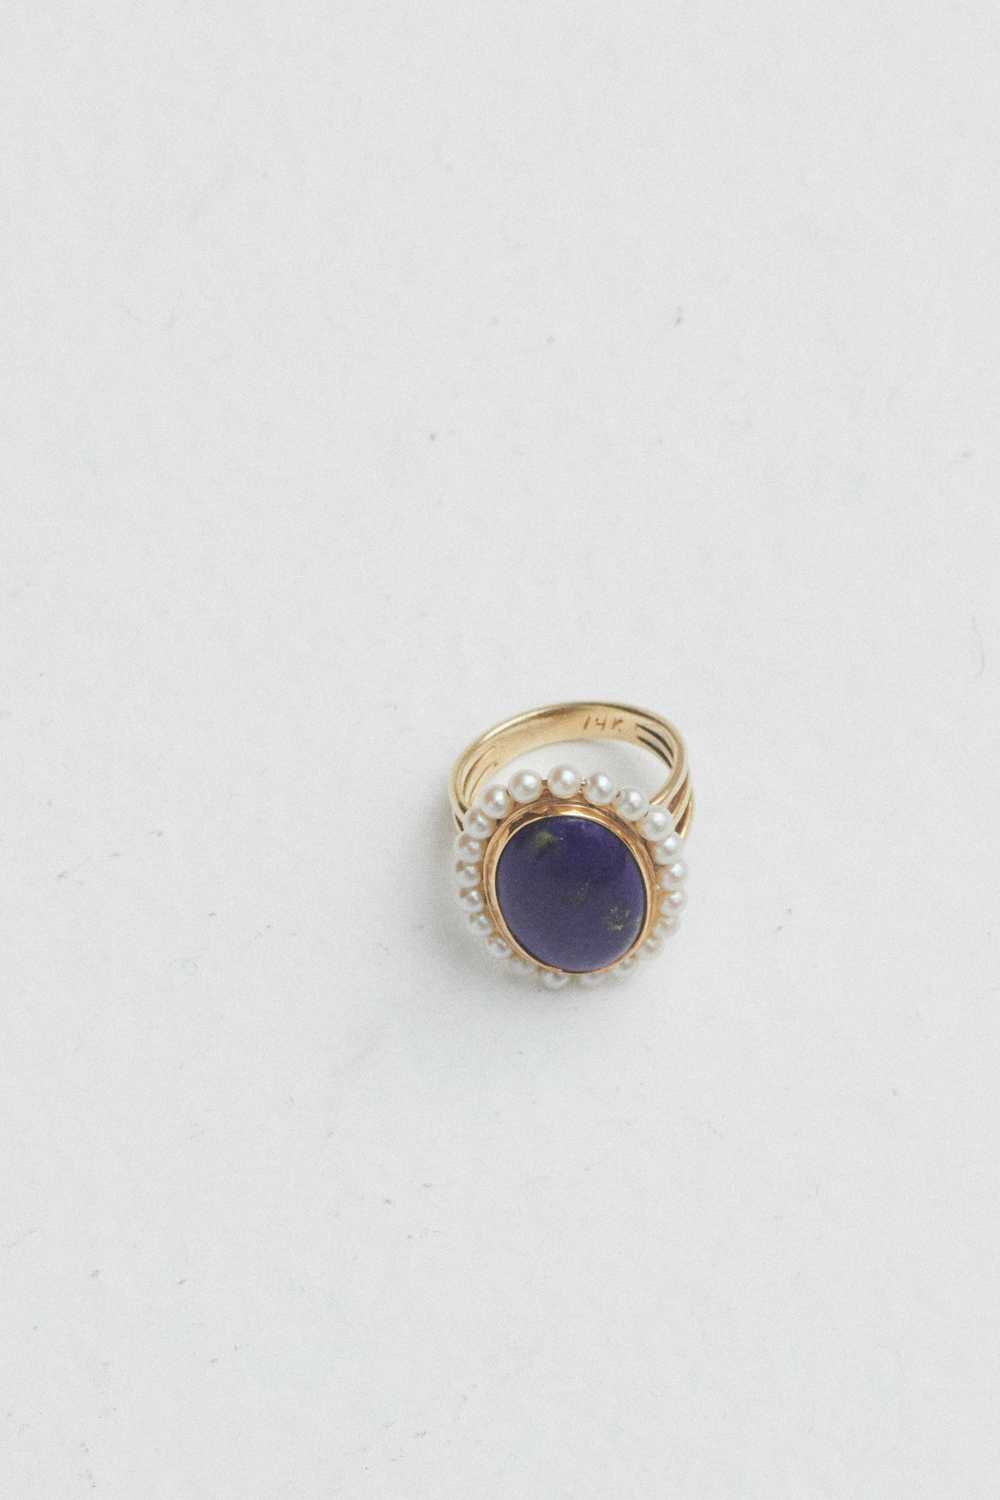 Lapis Lazuli and Pearl Ring - image 3